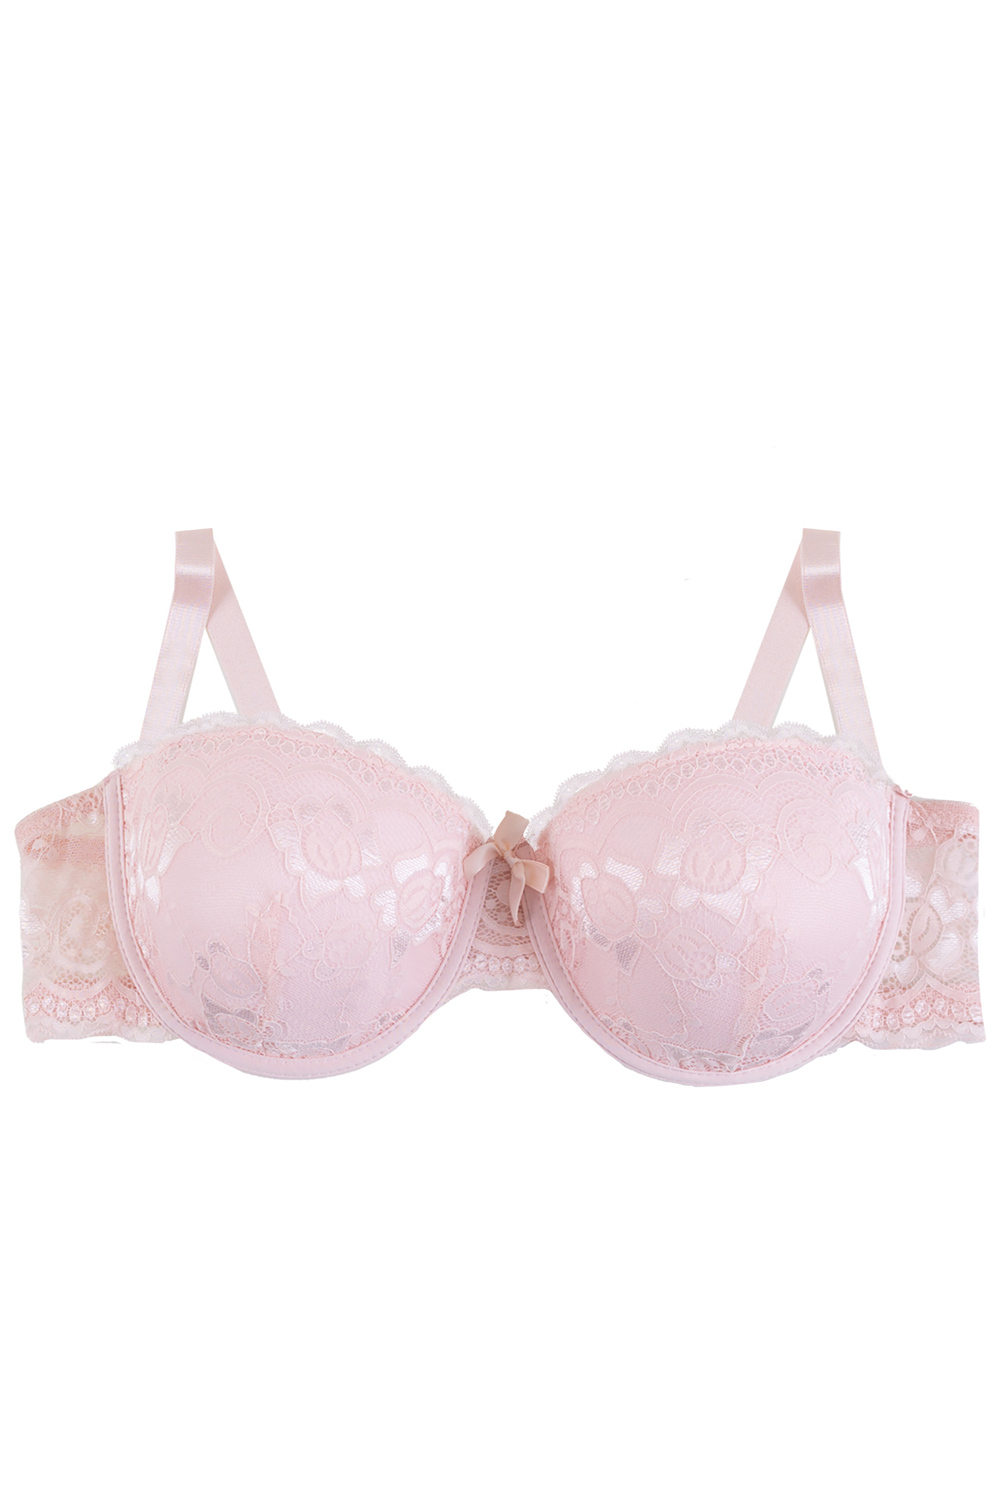 Dim Sublim Lace nude pink push-up balconette bra